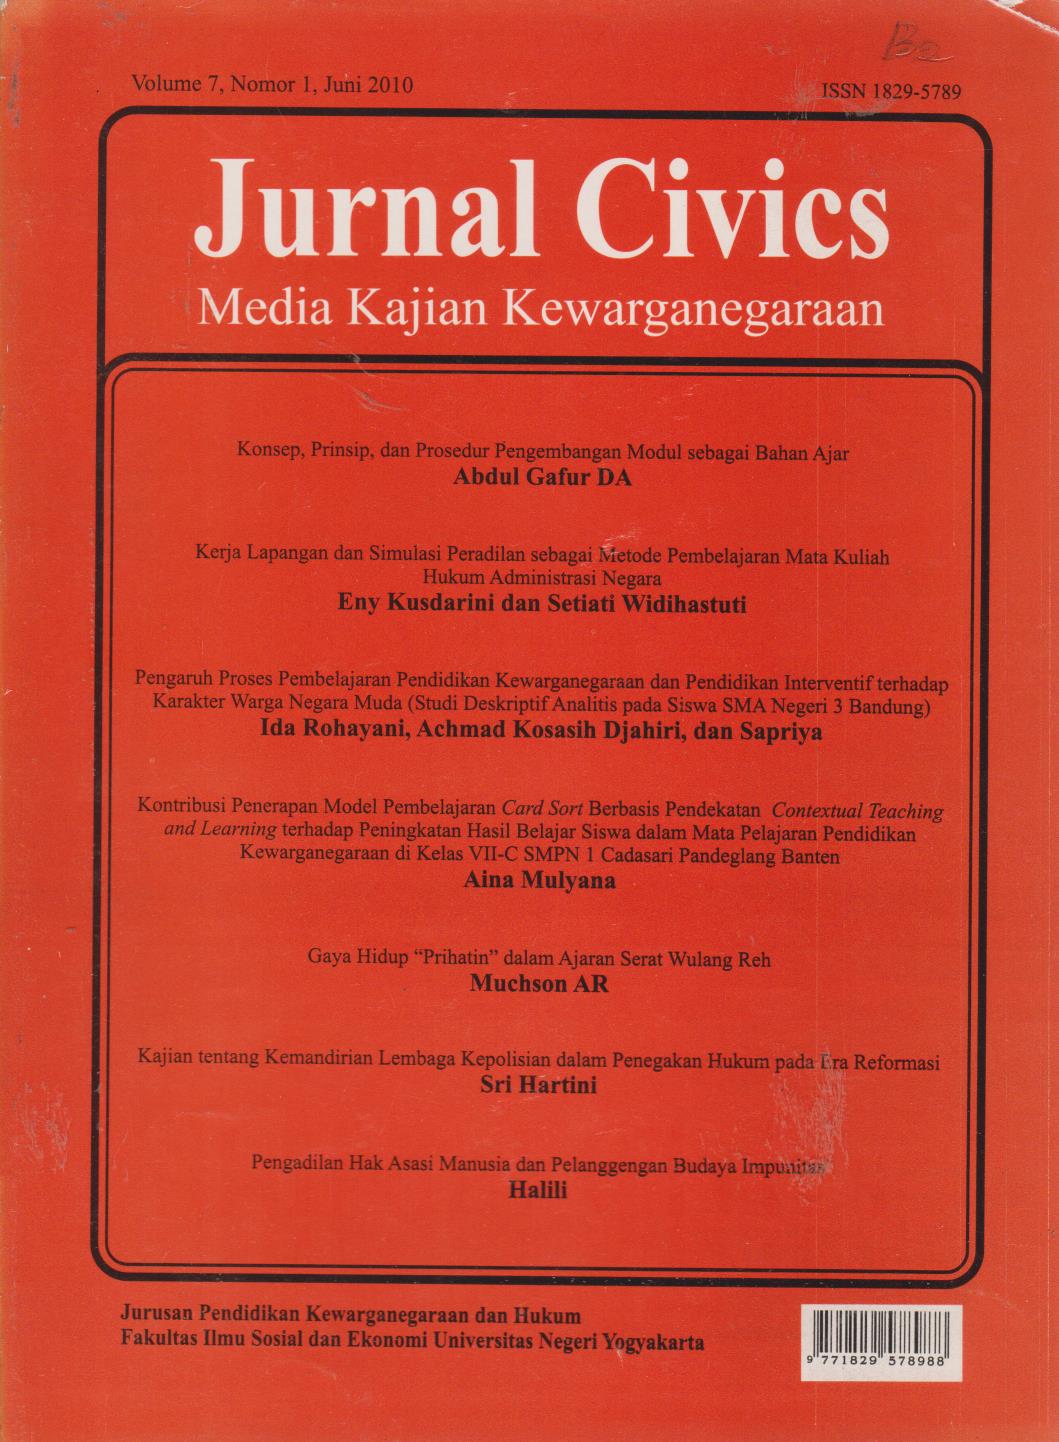 Jurnal Civics : Media Kajian Kewarganegaraan, Volume 7, Nomor 1, Juni 2010